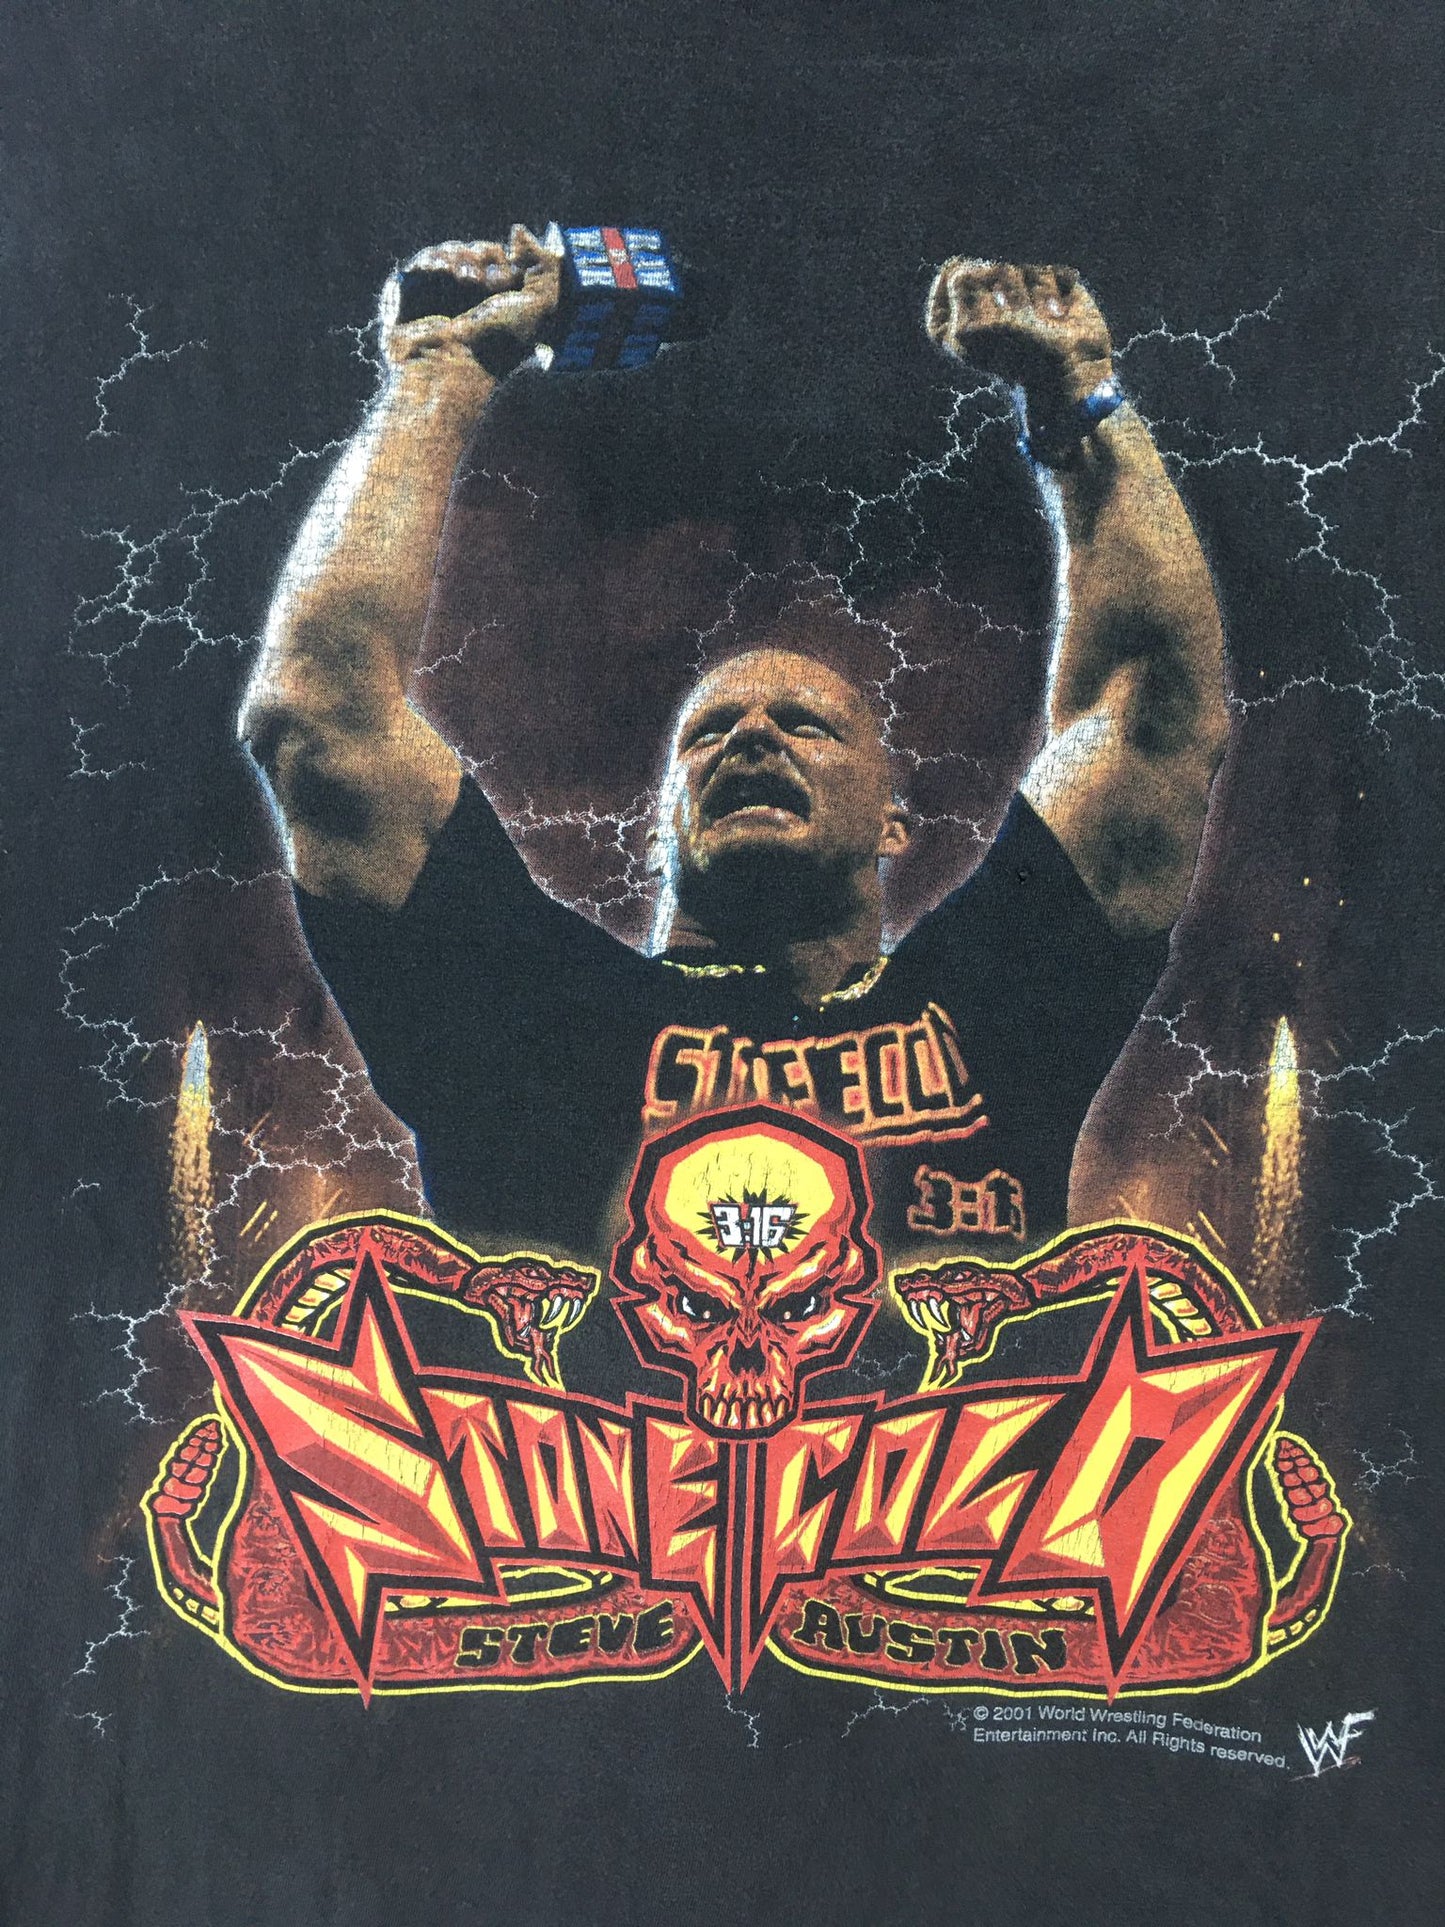 Vintage Stone Cold Steve Austin WWF 2001 T-shirt